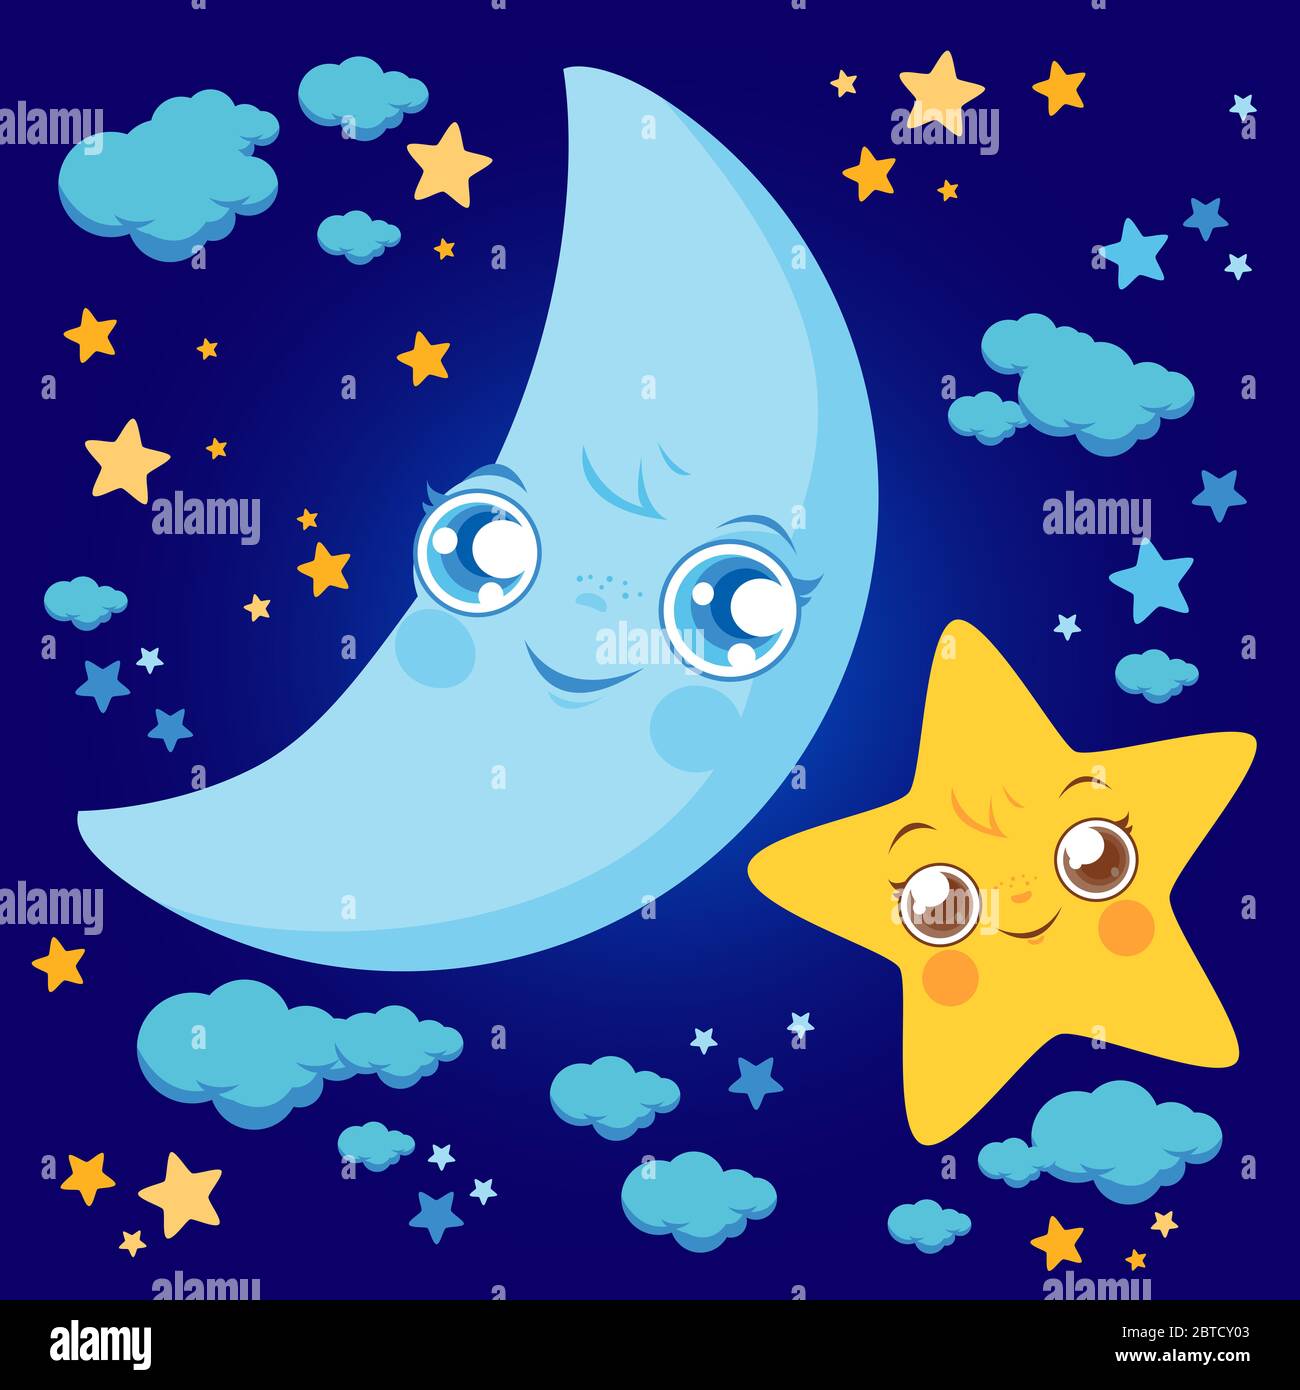 Cartoon moon and star characters at the night sky. Stock Photo